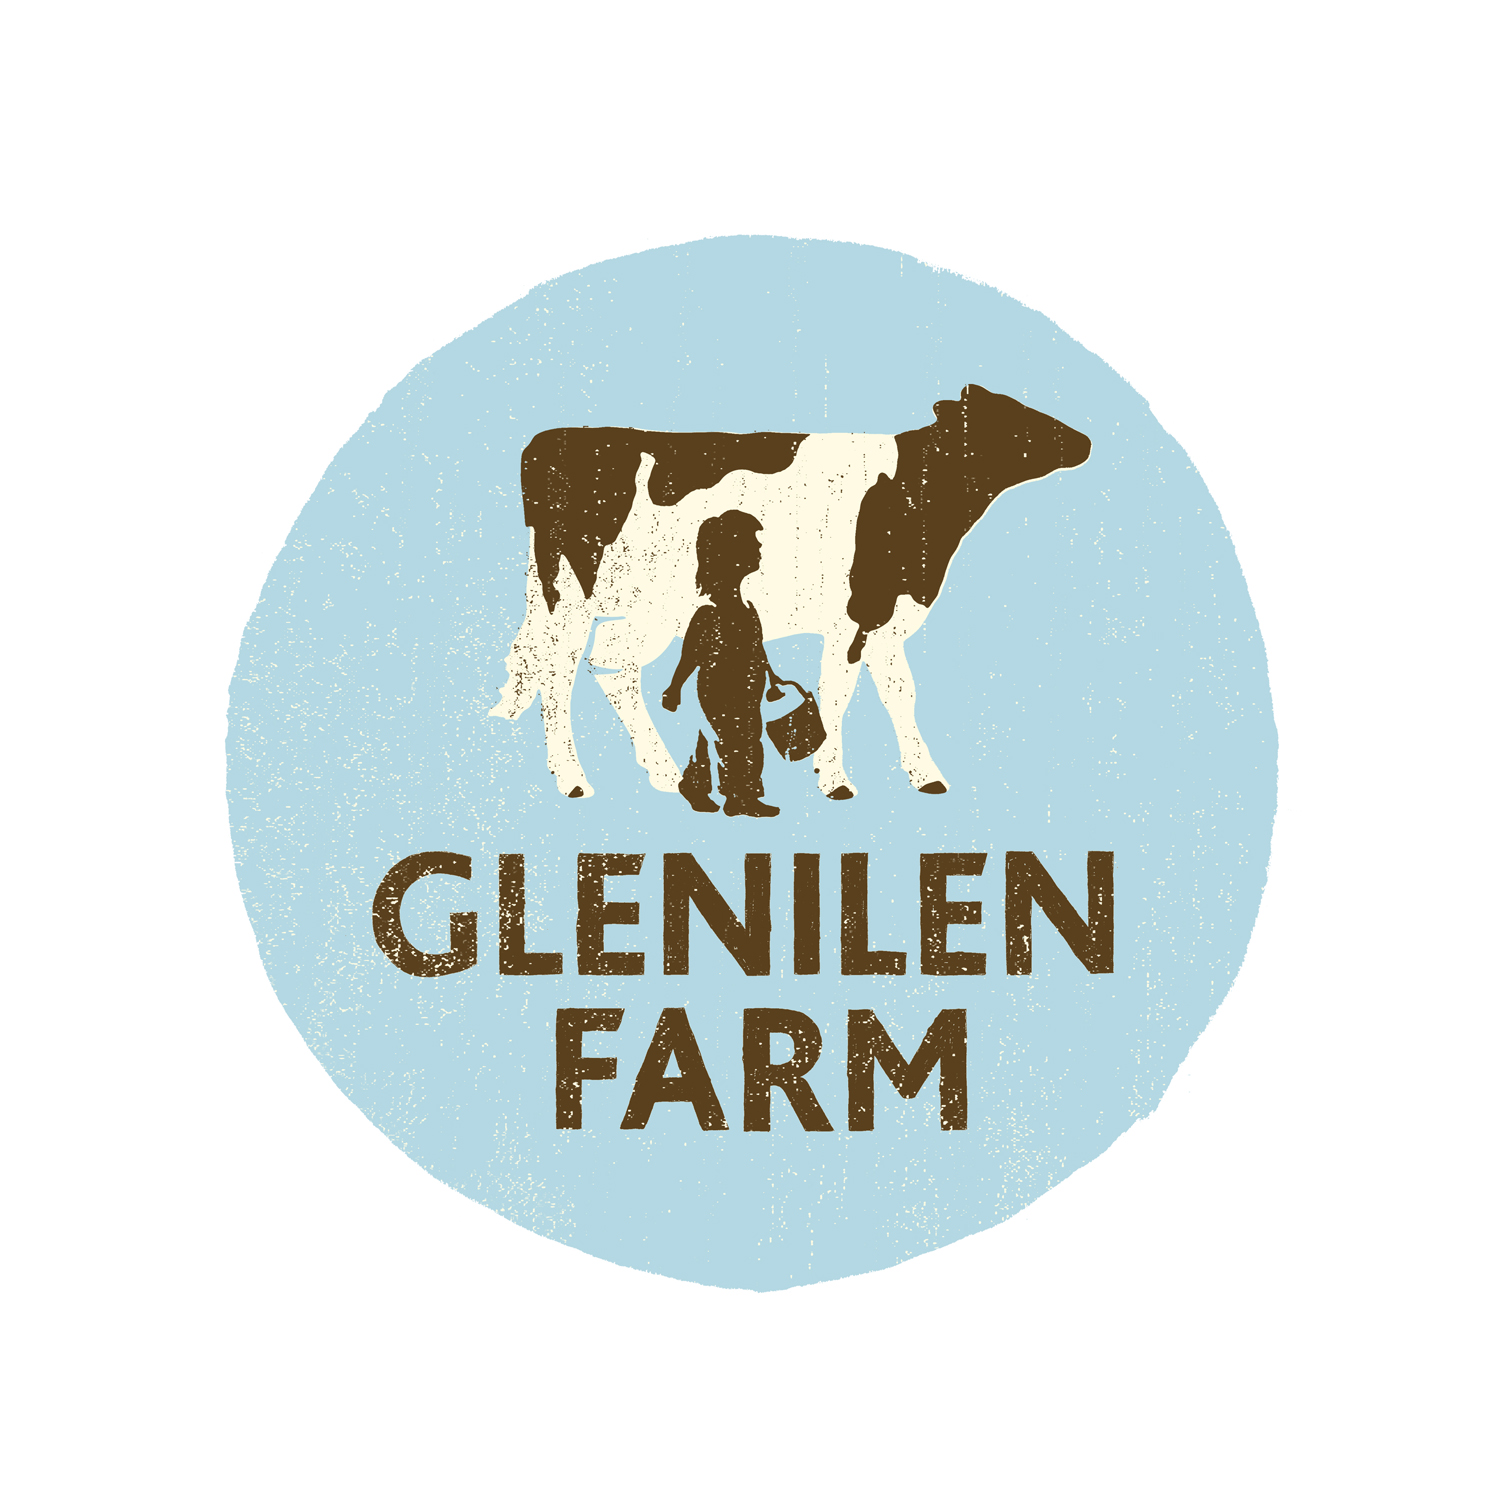 Image of Glenilen Farm Ltd logotype